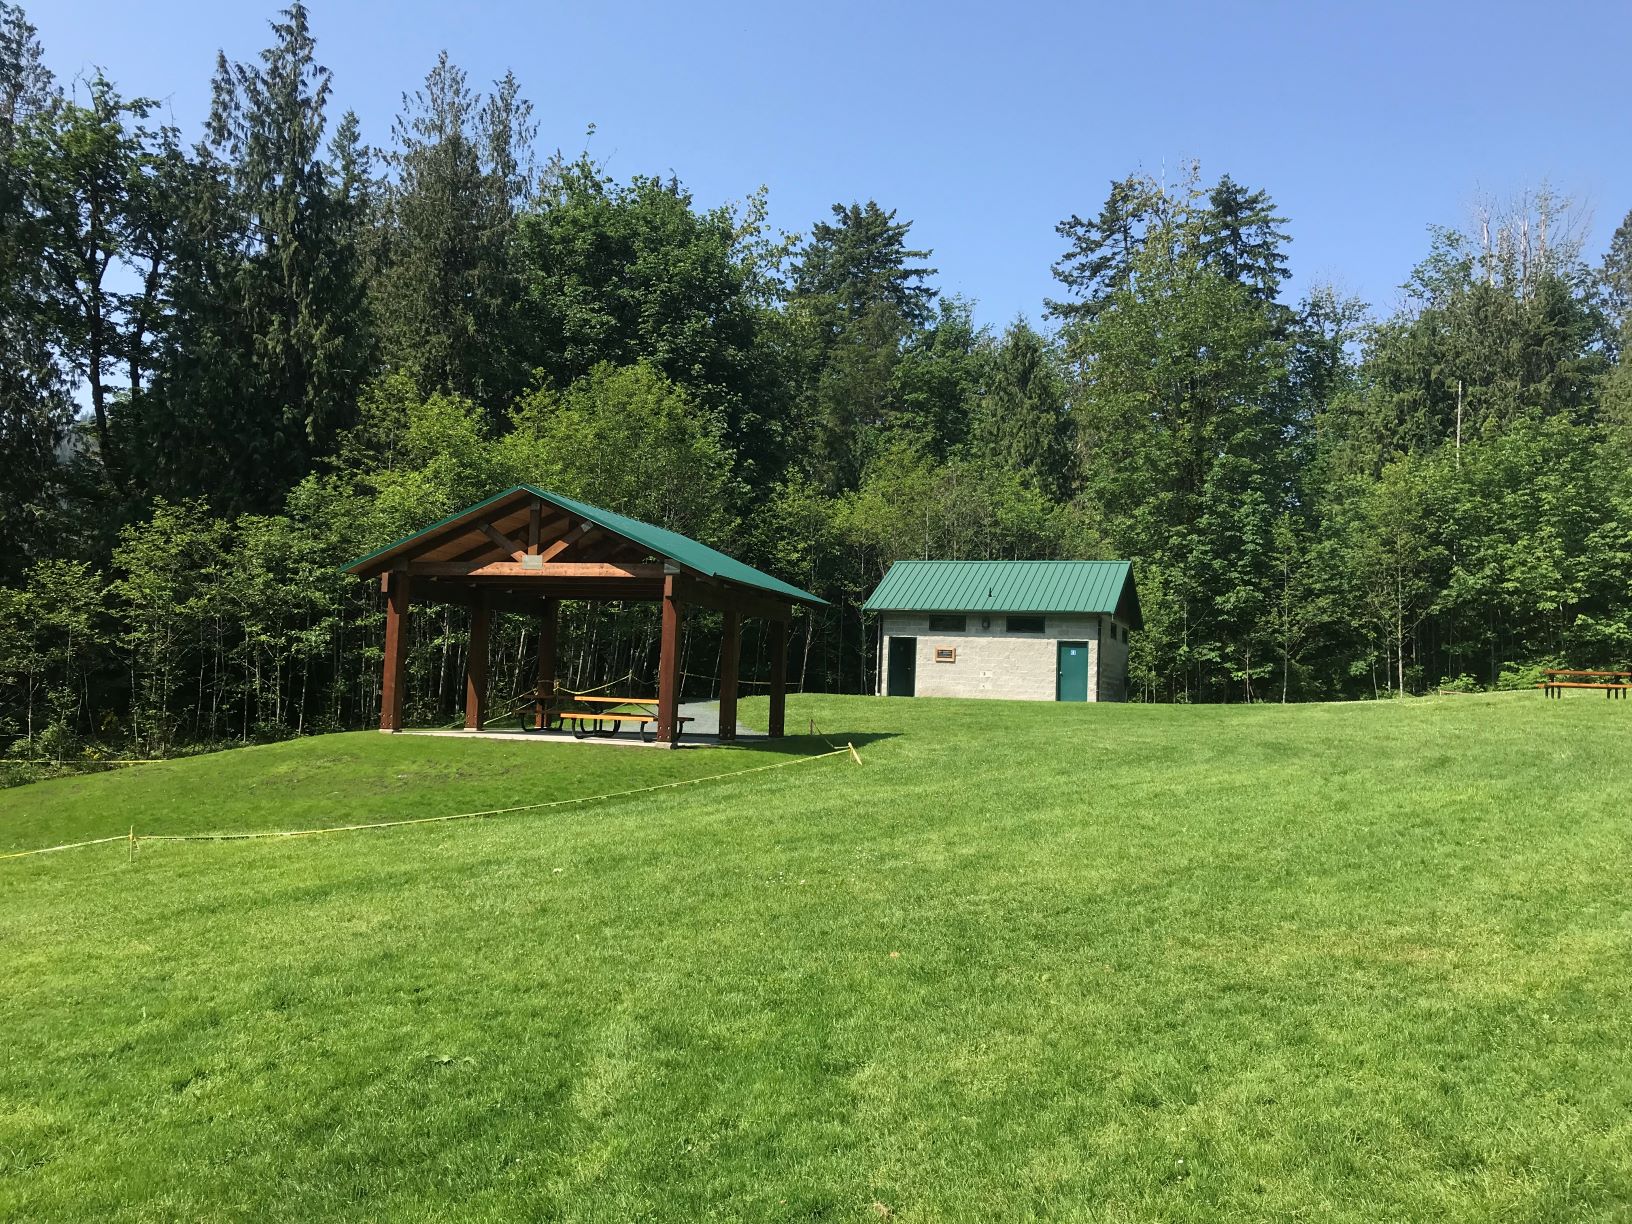 Mile 77 Park picnic shelter 2019